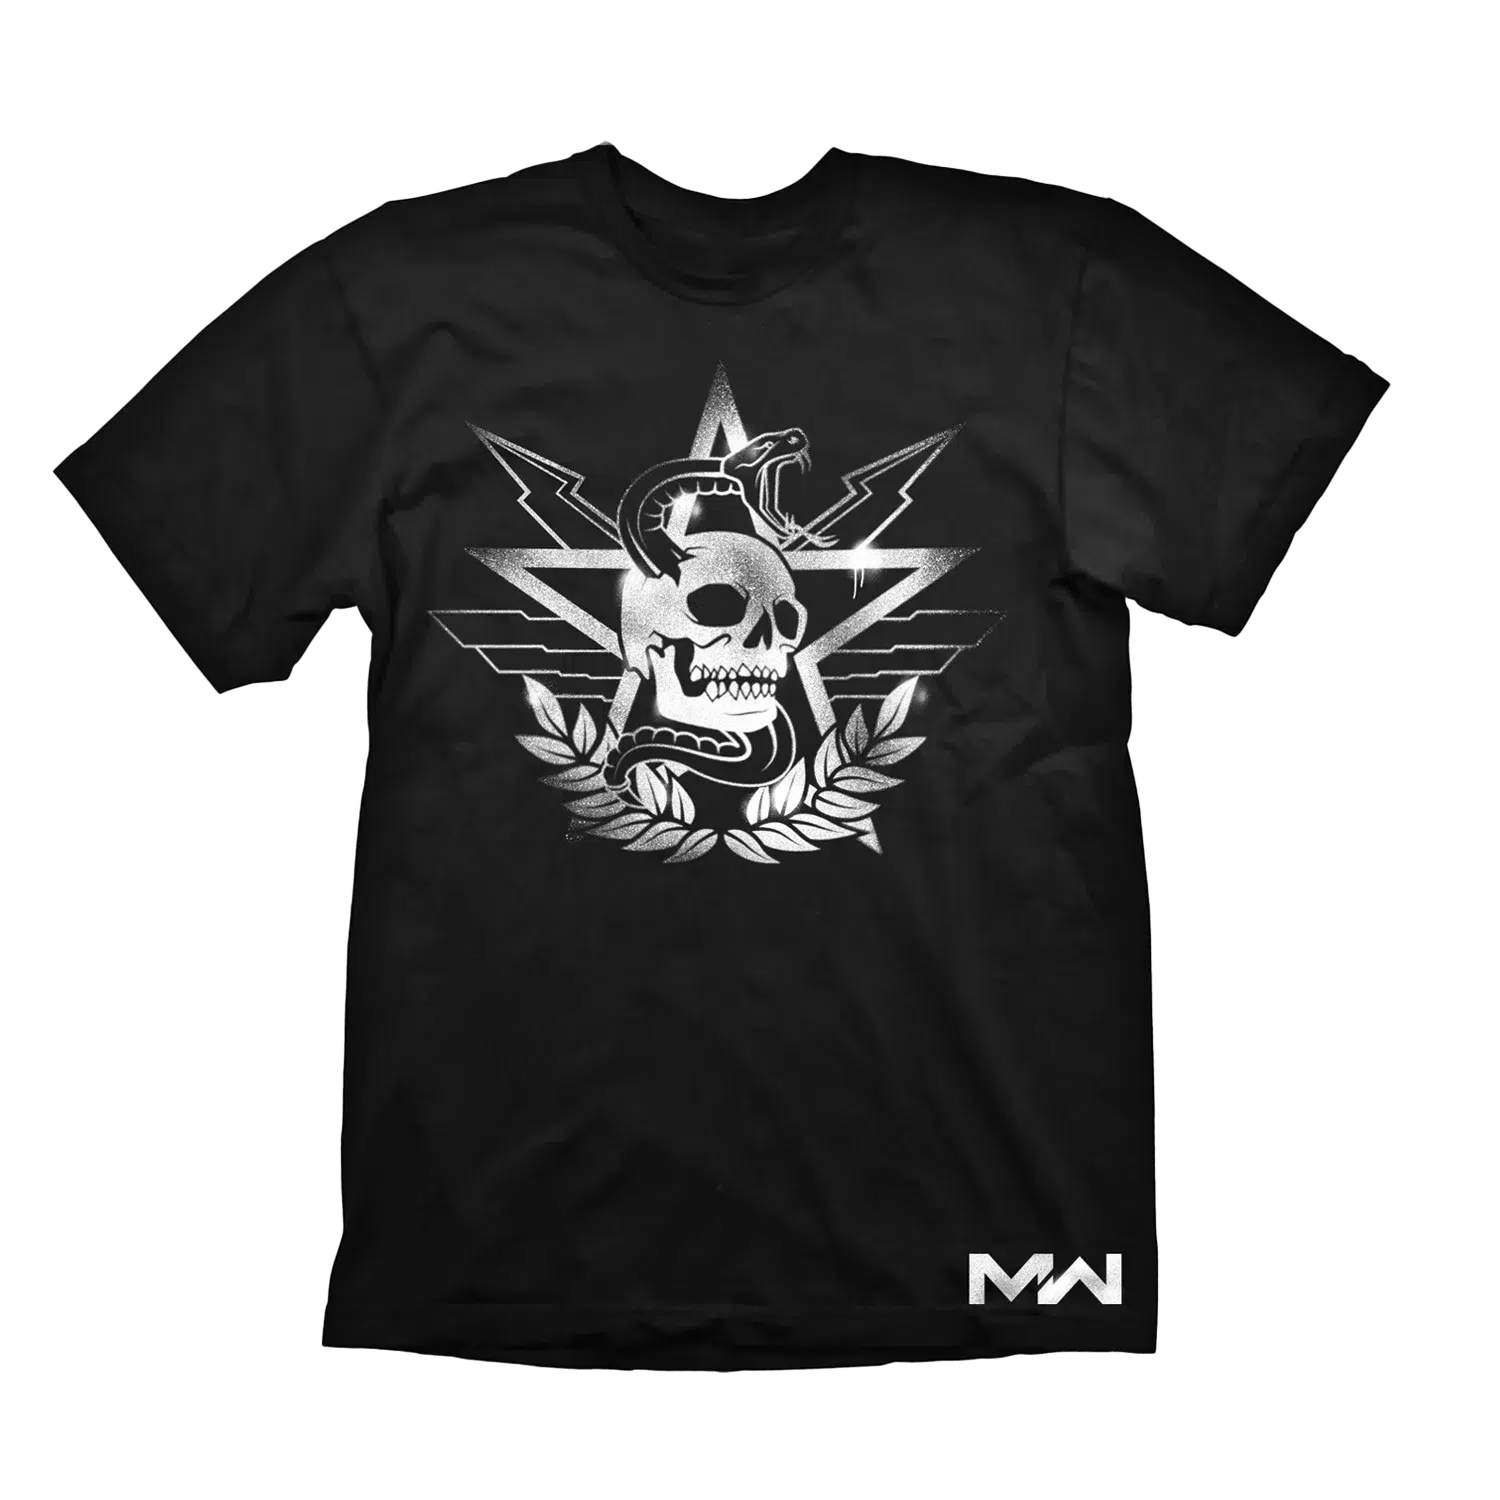 Call of Duty Modern Warfare T-Shirt "East Factions" Black M